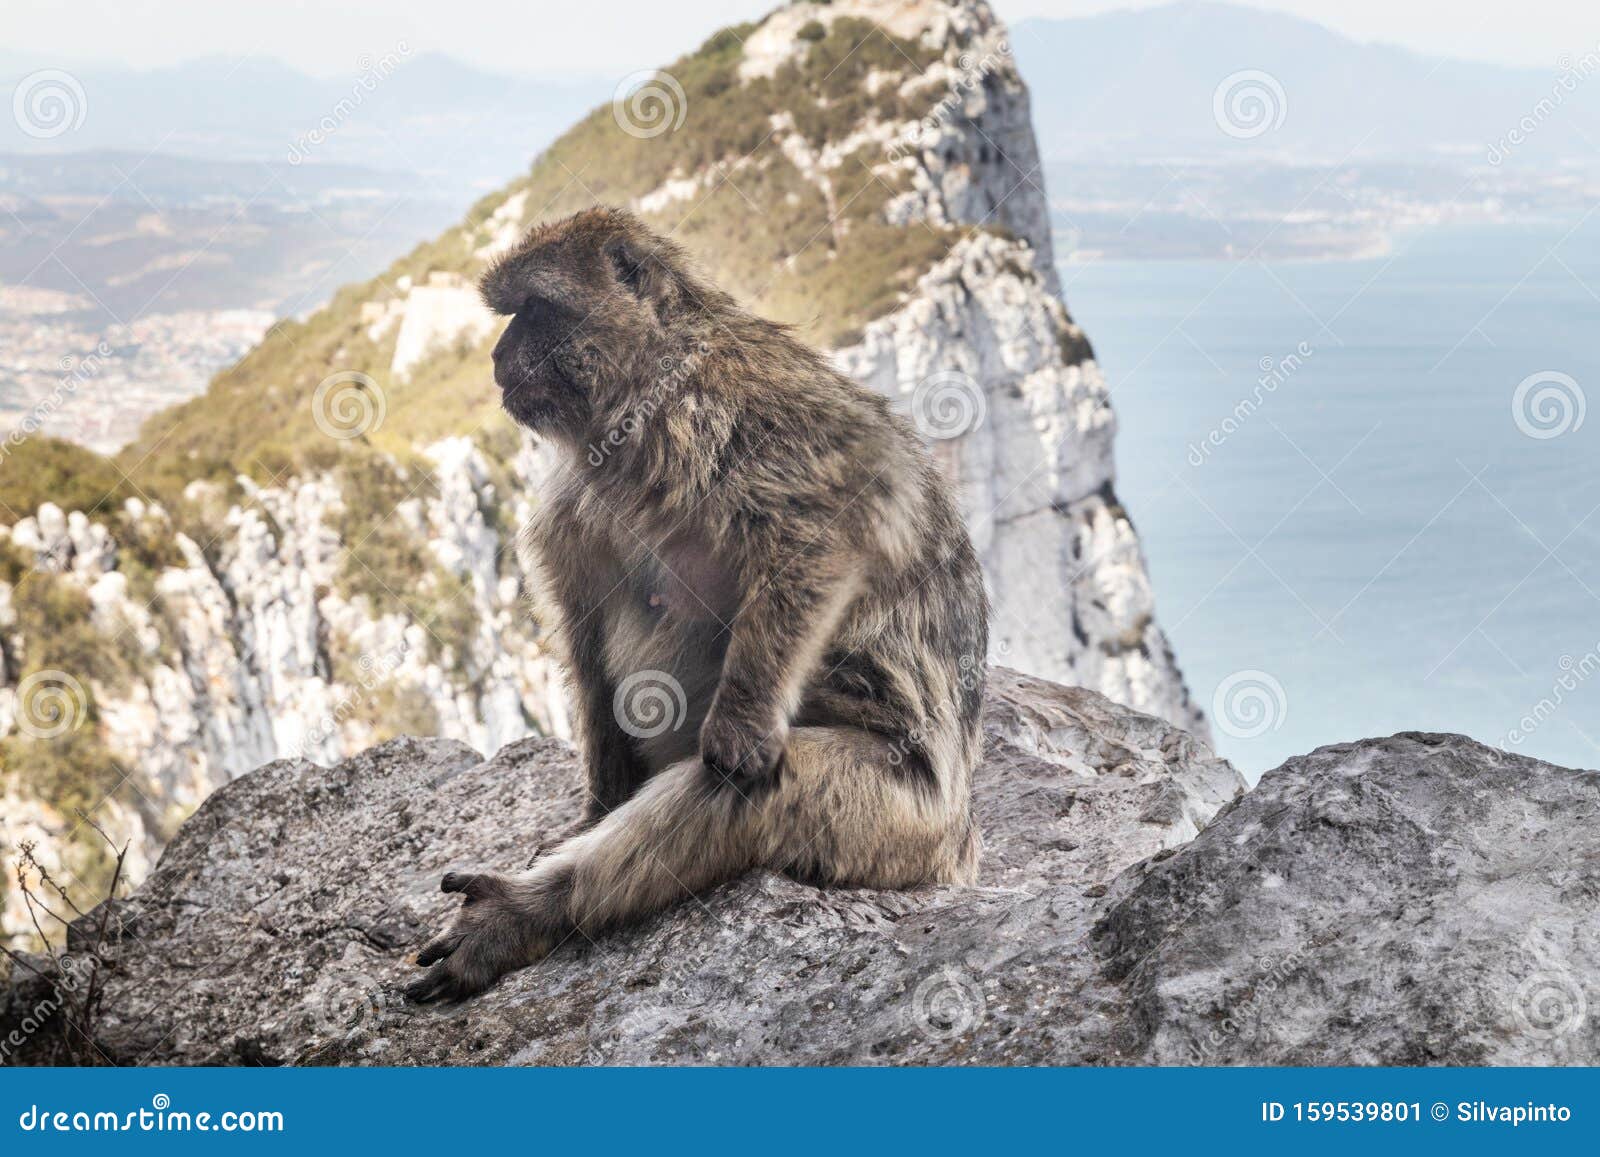 monkey climbing rock on top of a mountain